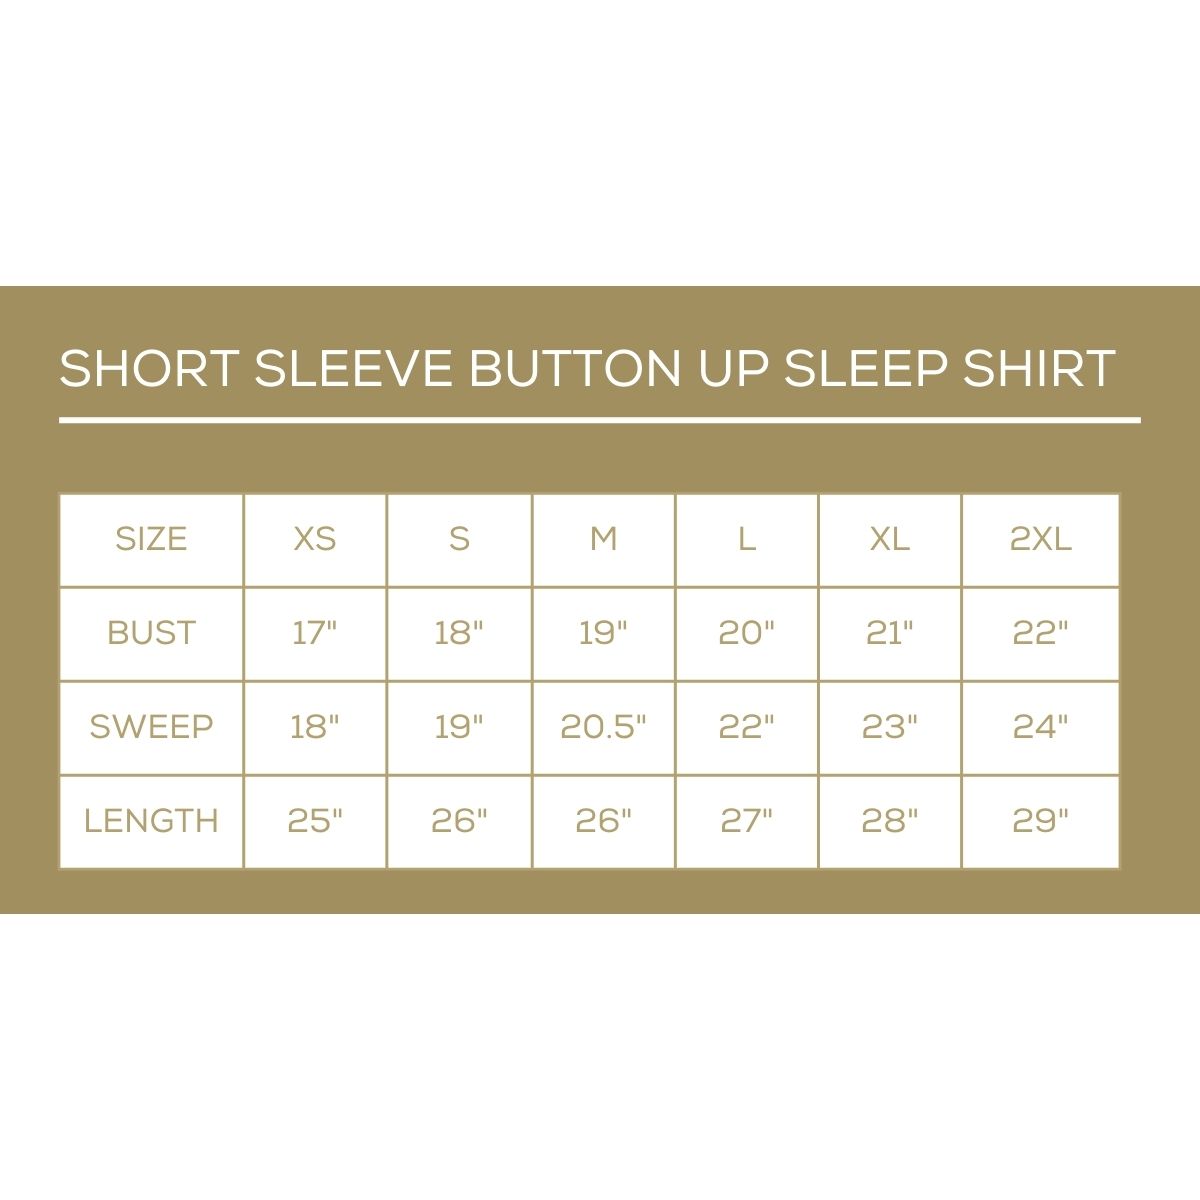 Awe Shucks Short Sleeve Button Up Sleep Shirt